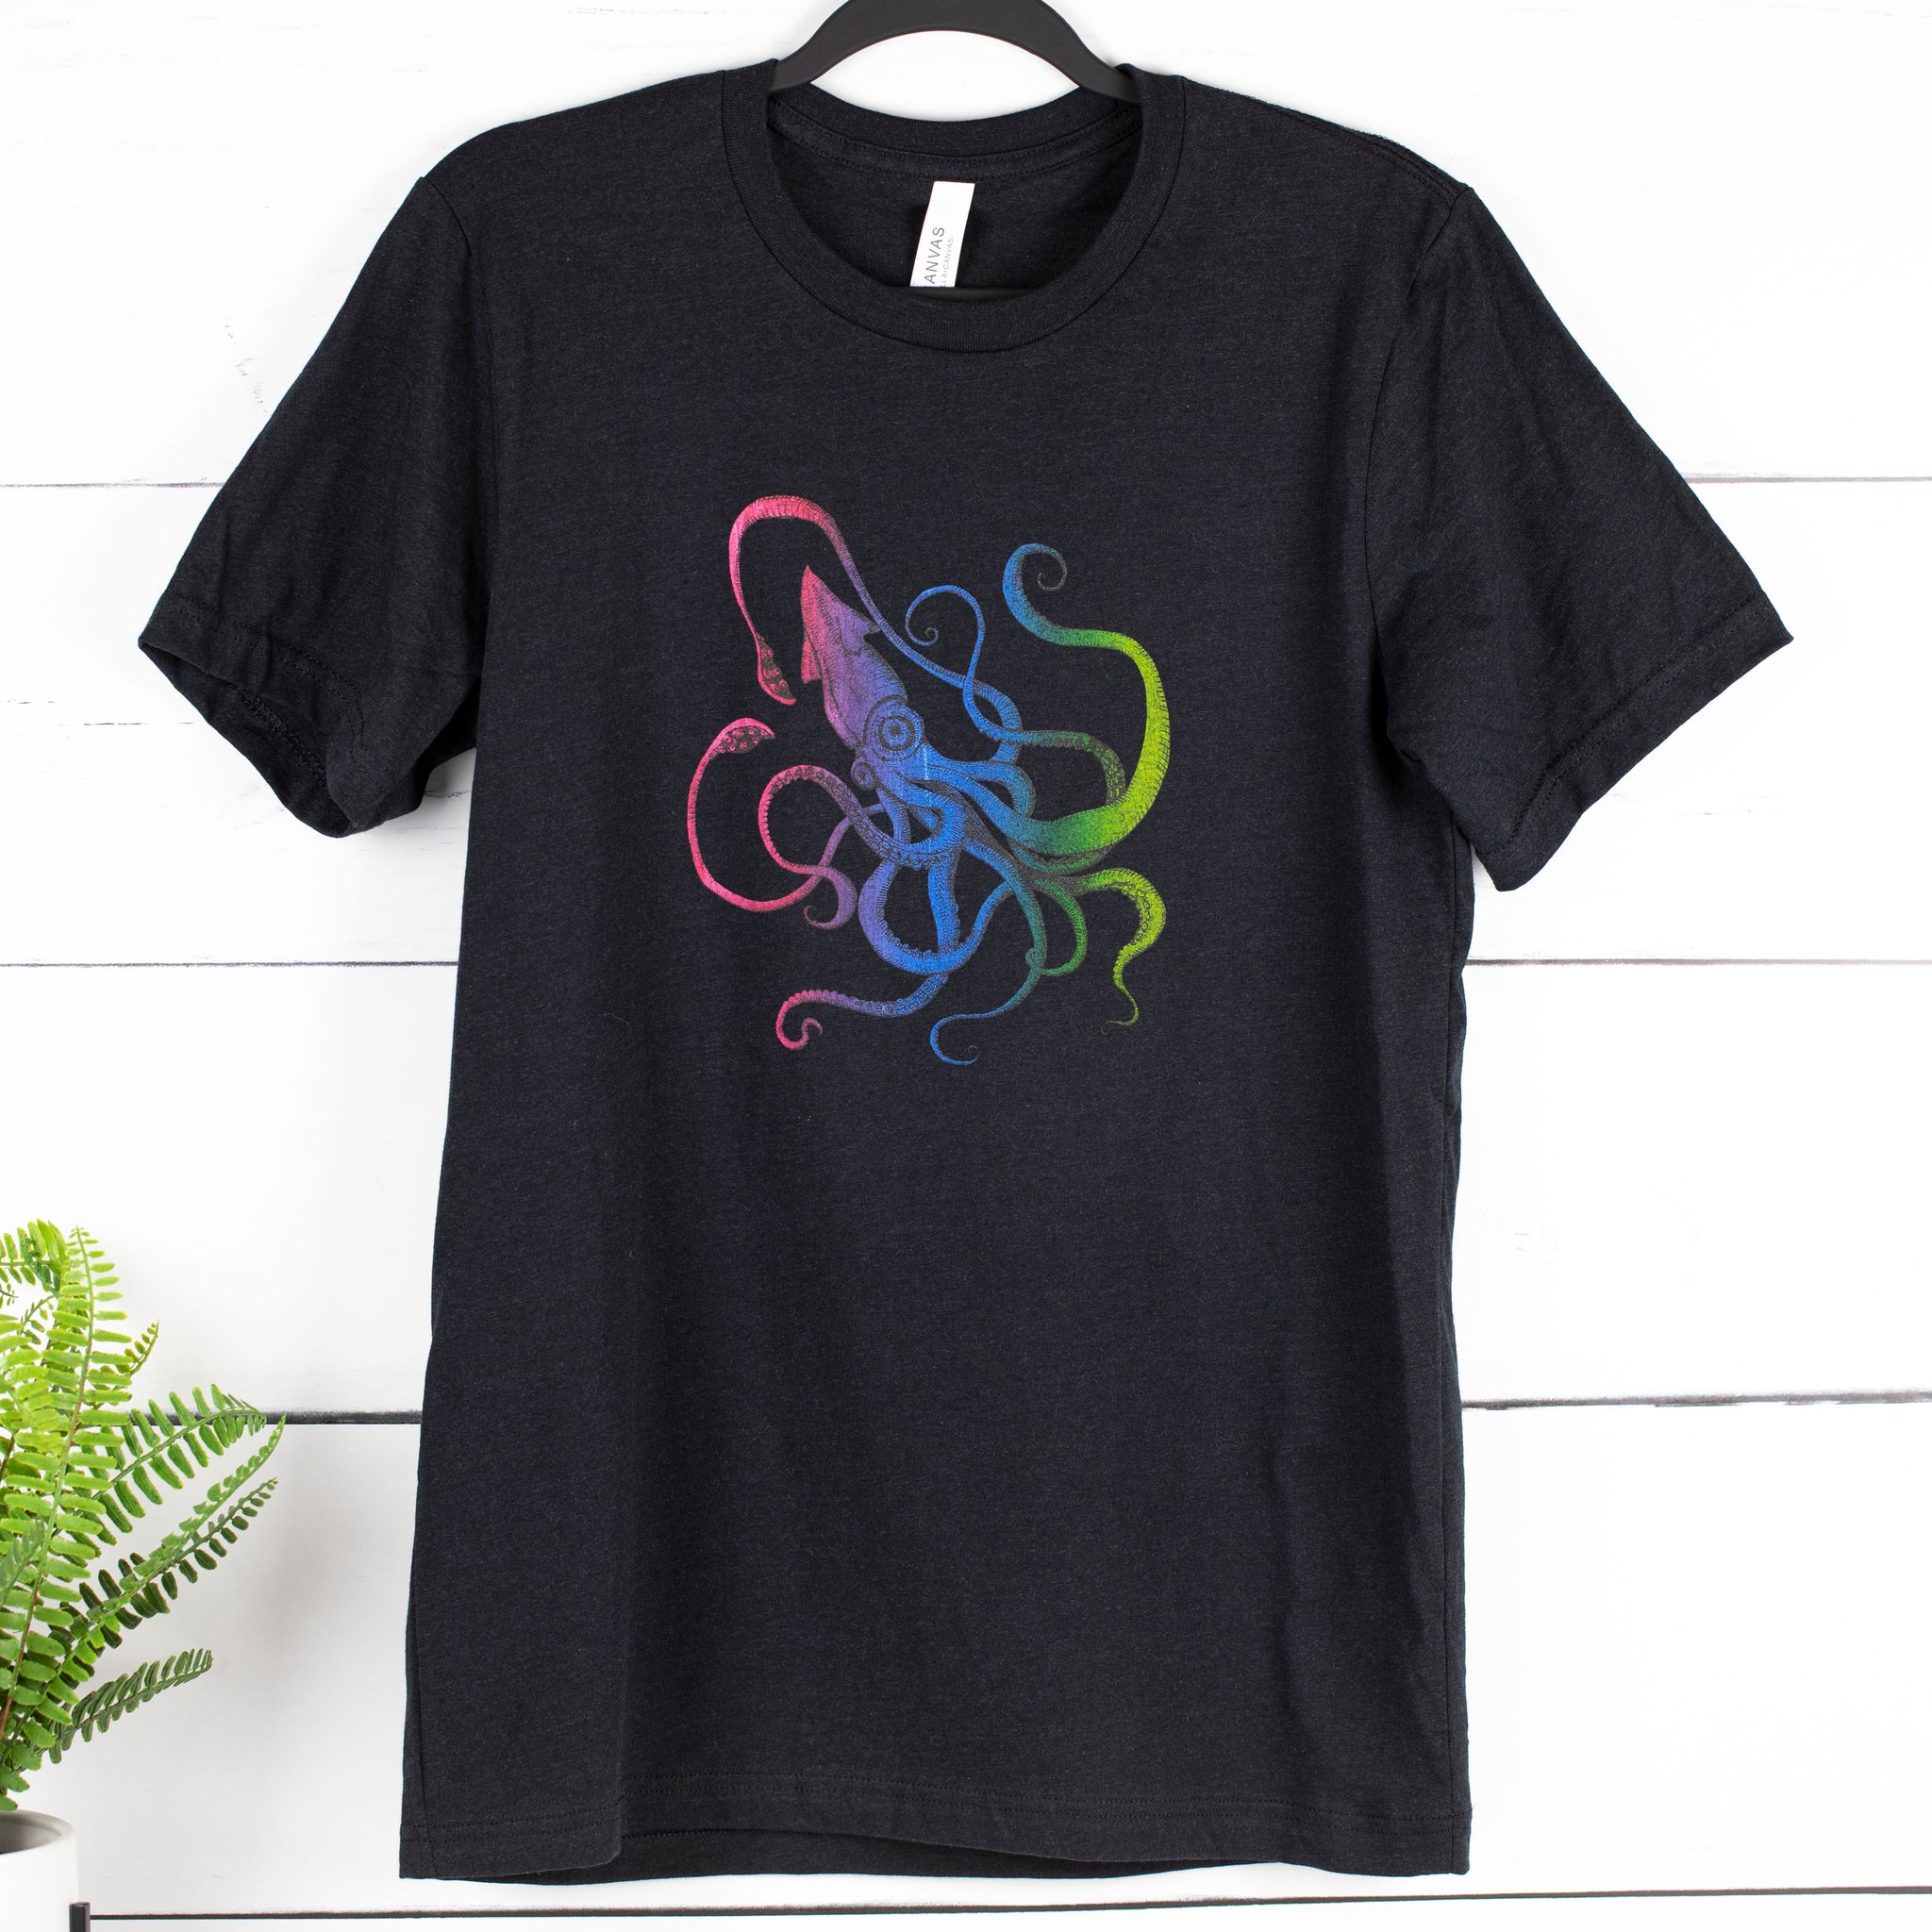 Giant Squid Unisex Tee Shirt - Black Rainbow